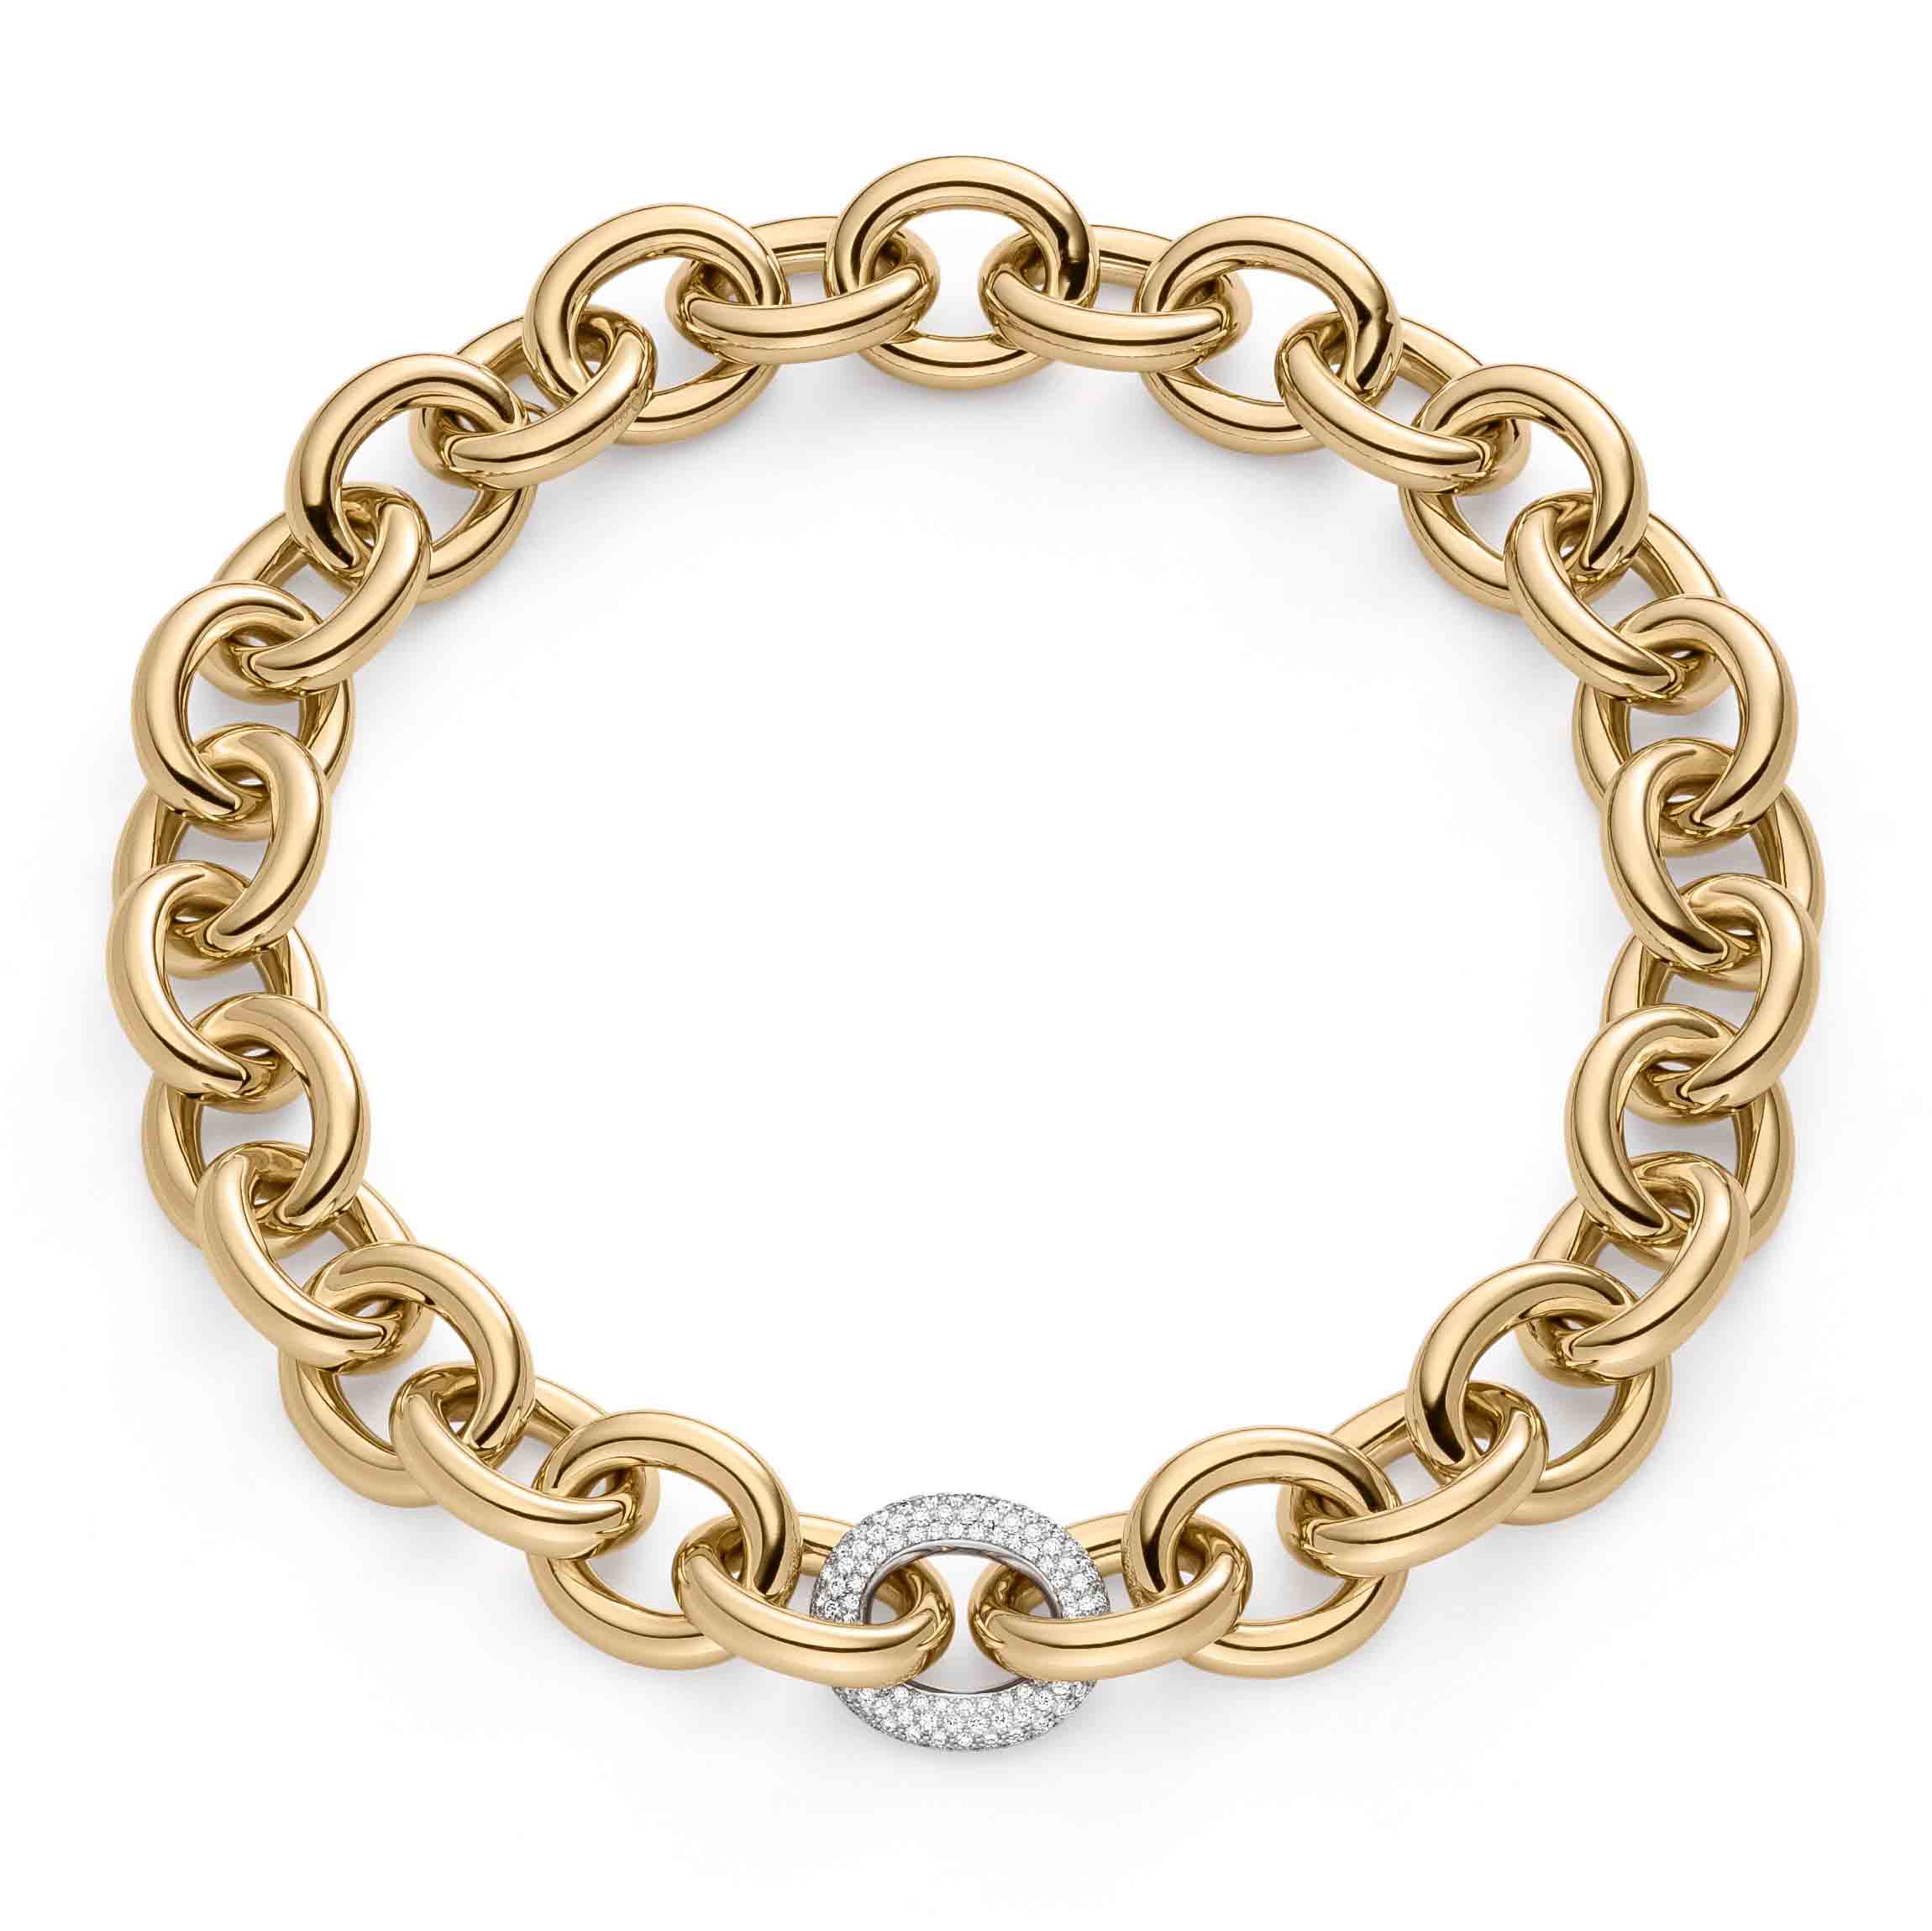 Wholesale OEM/ODM Jewelry silver bracelet suppliers 18k gold plated jewelry OEM